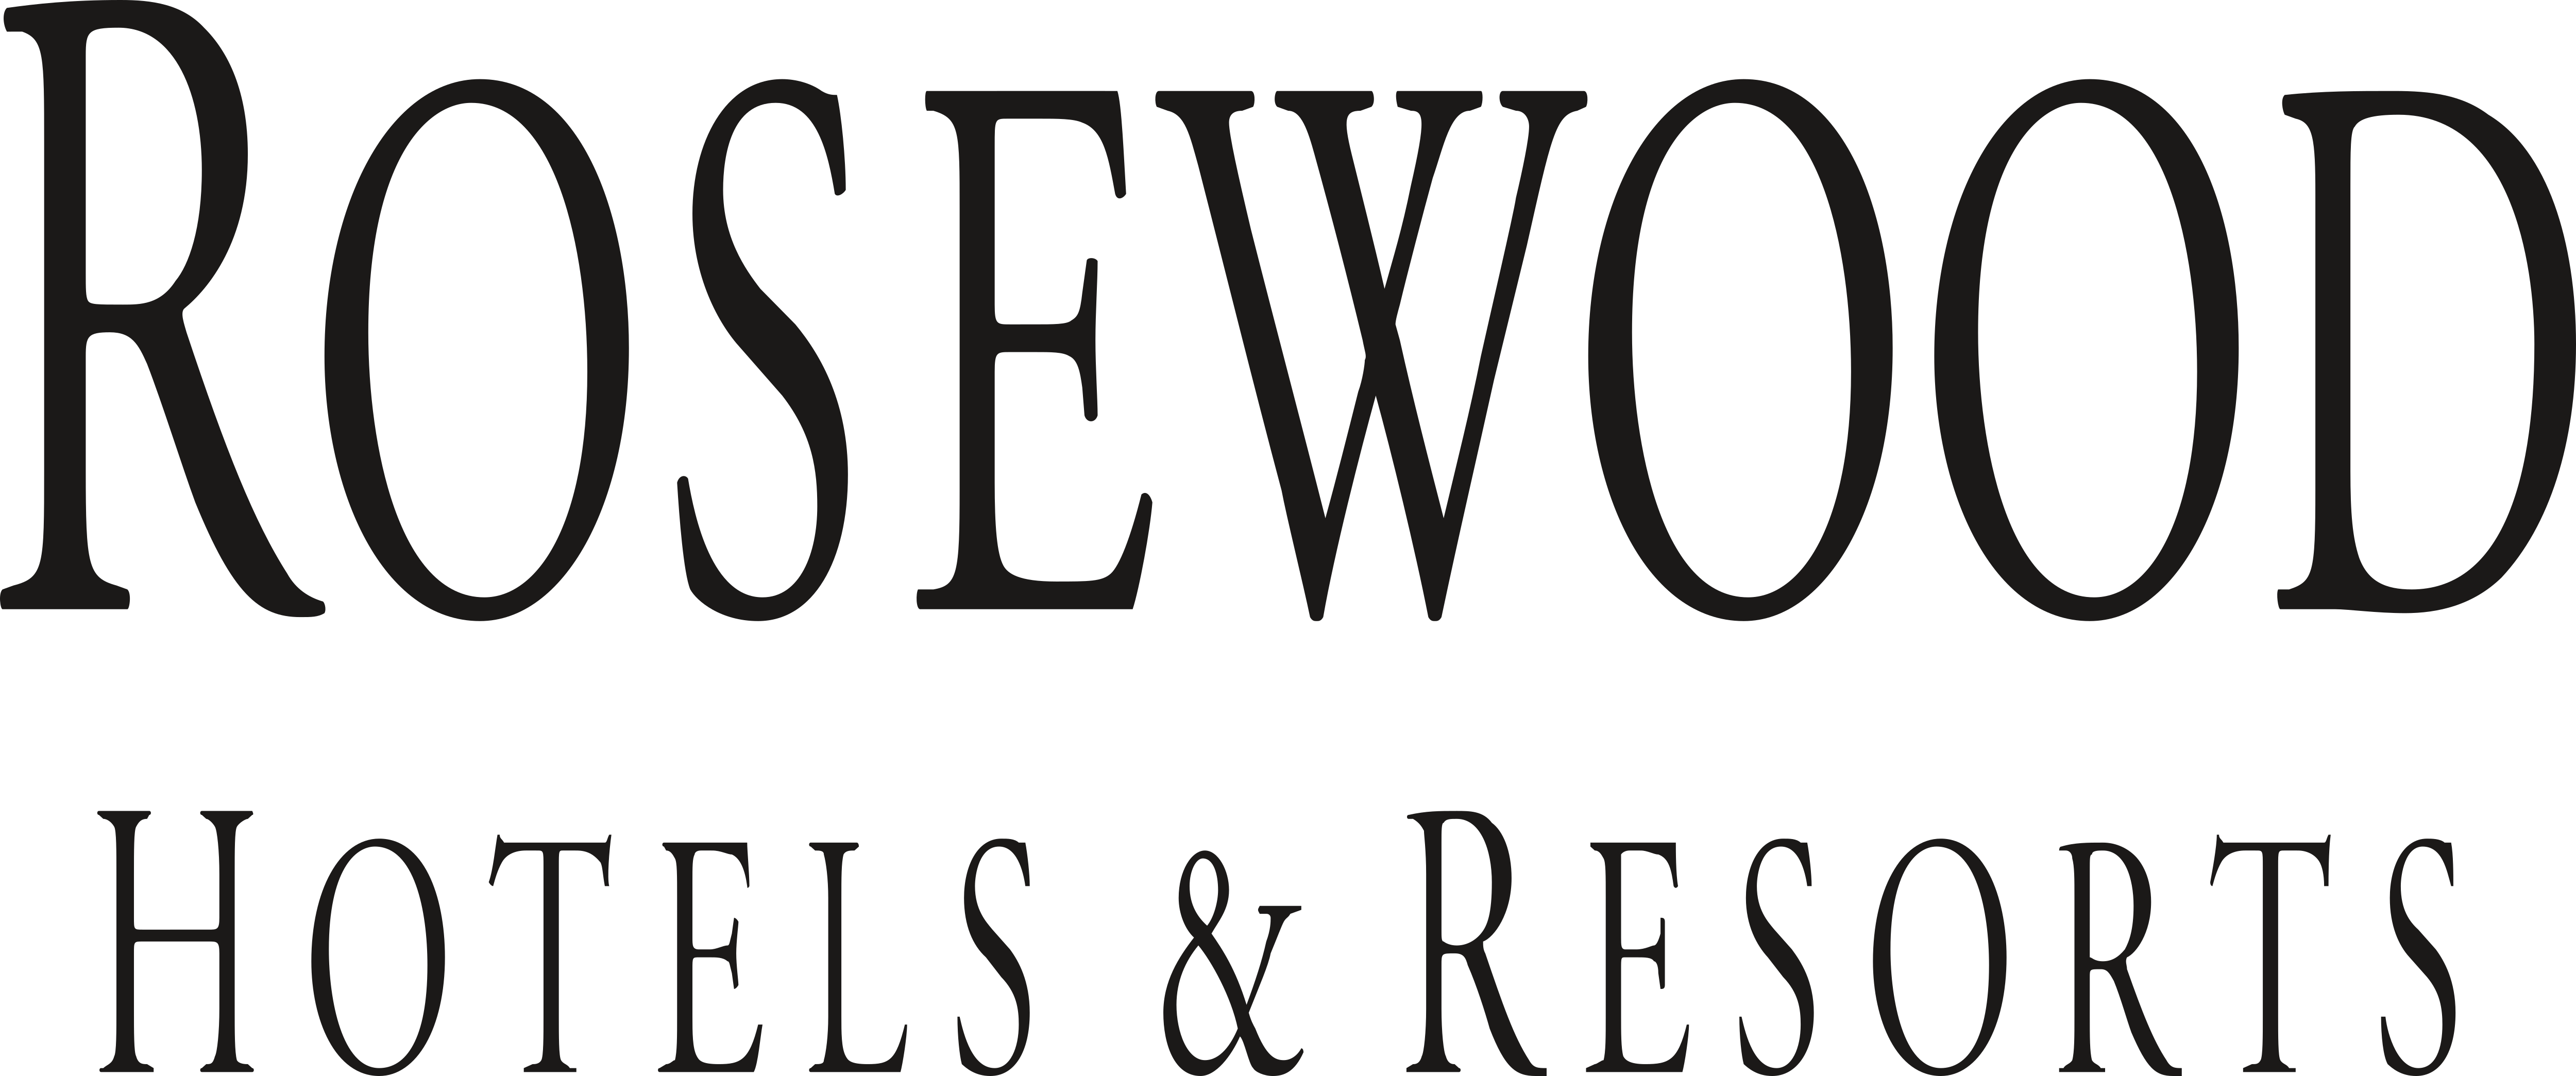 Rosewood Logo - Rosewood Hotel & Resorts